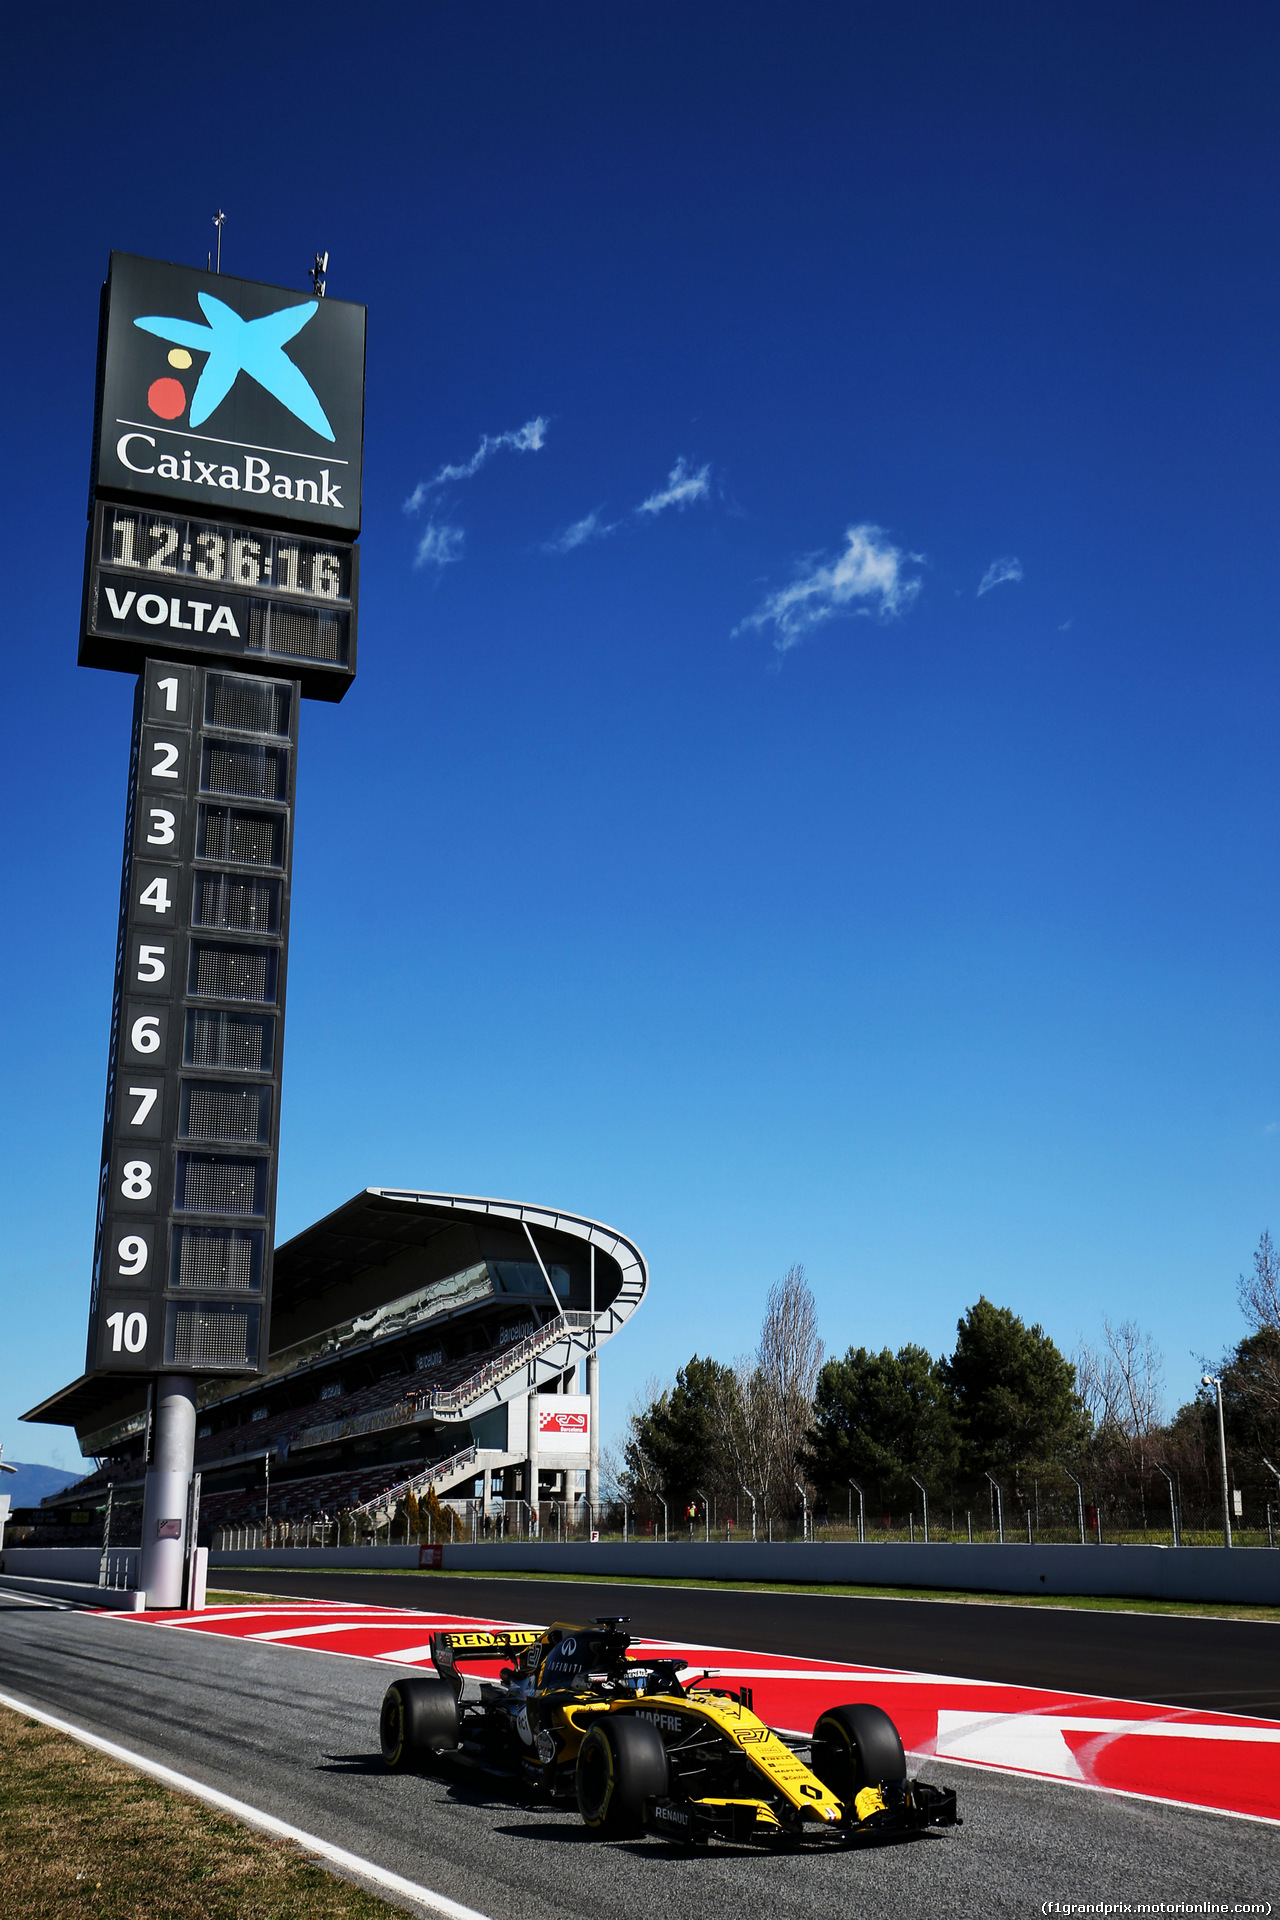 TEST F1 BARCELLONA 6 MARZO, Nico Hulkenberg (GER) Renault Sport F1 Team RS18.
06.03.2018.